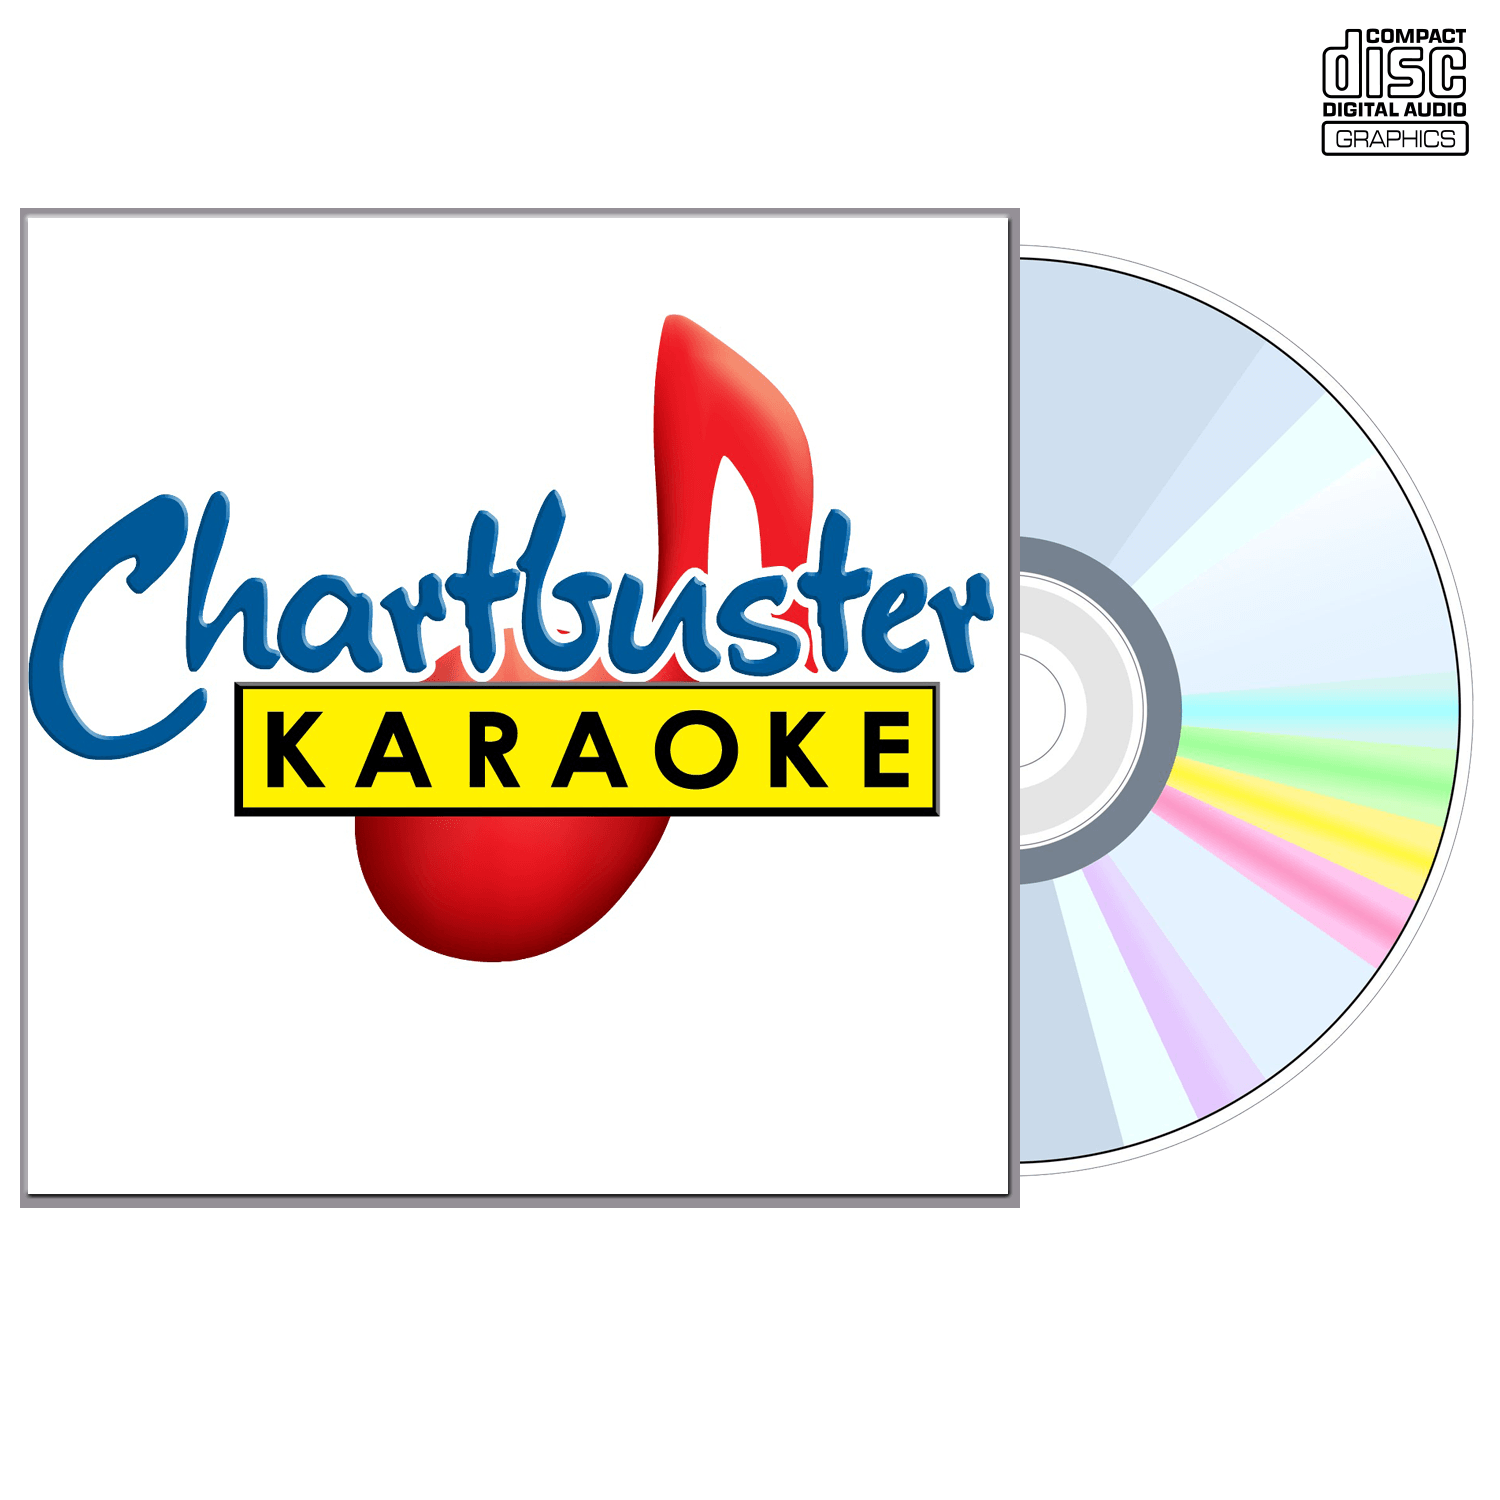 Blake Shelton Vol 2 - CD+G - Chartbuster Karaoke - Karaoke Home Entertainment